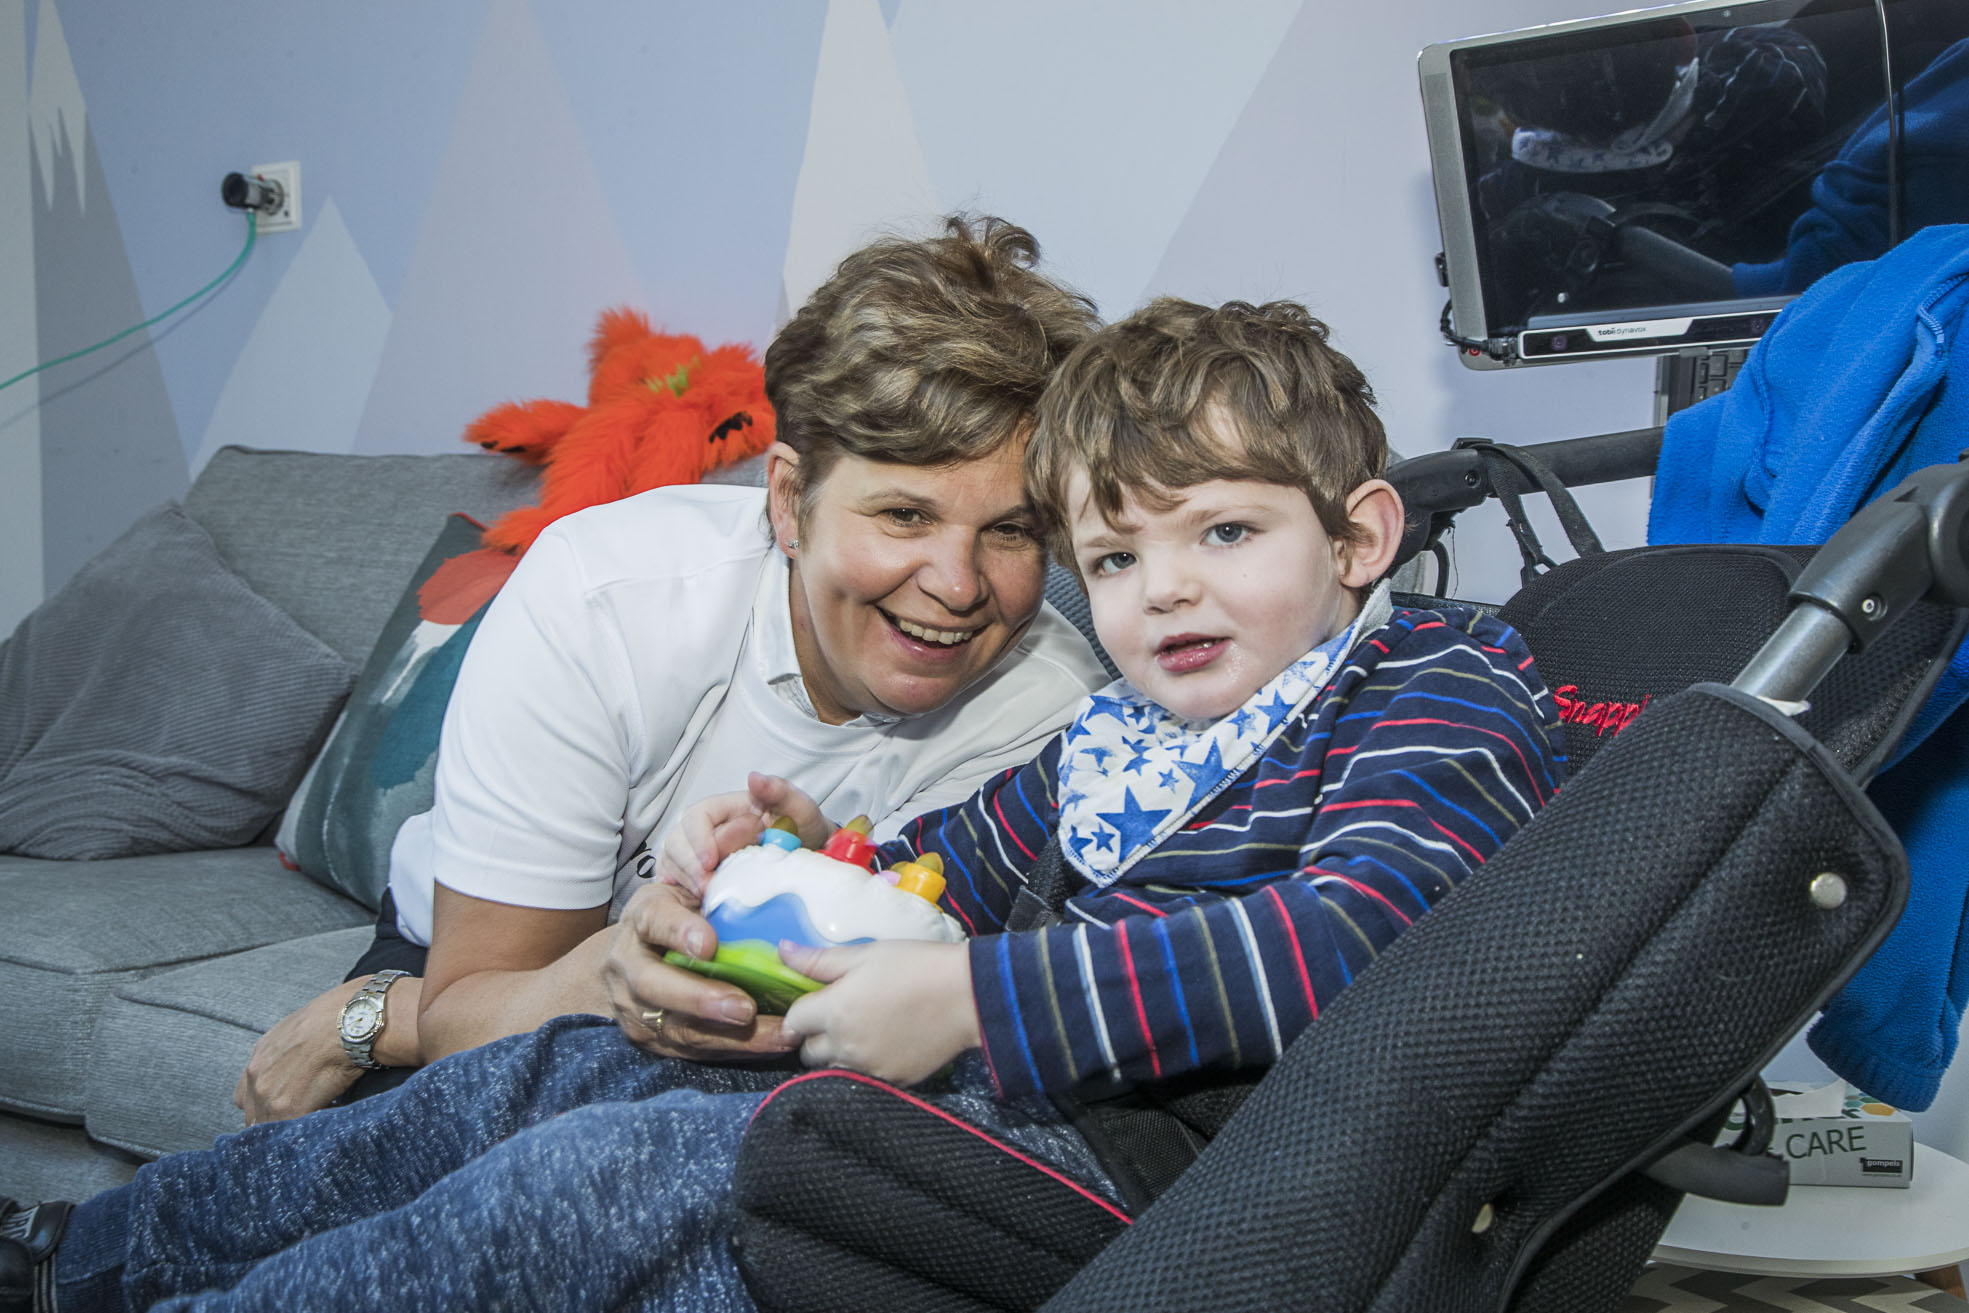 Children’s hospice charity aims to raise £30,000 with Snowdon trek